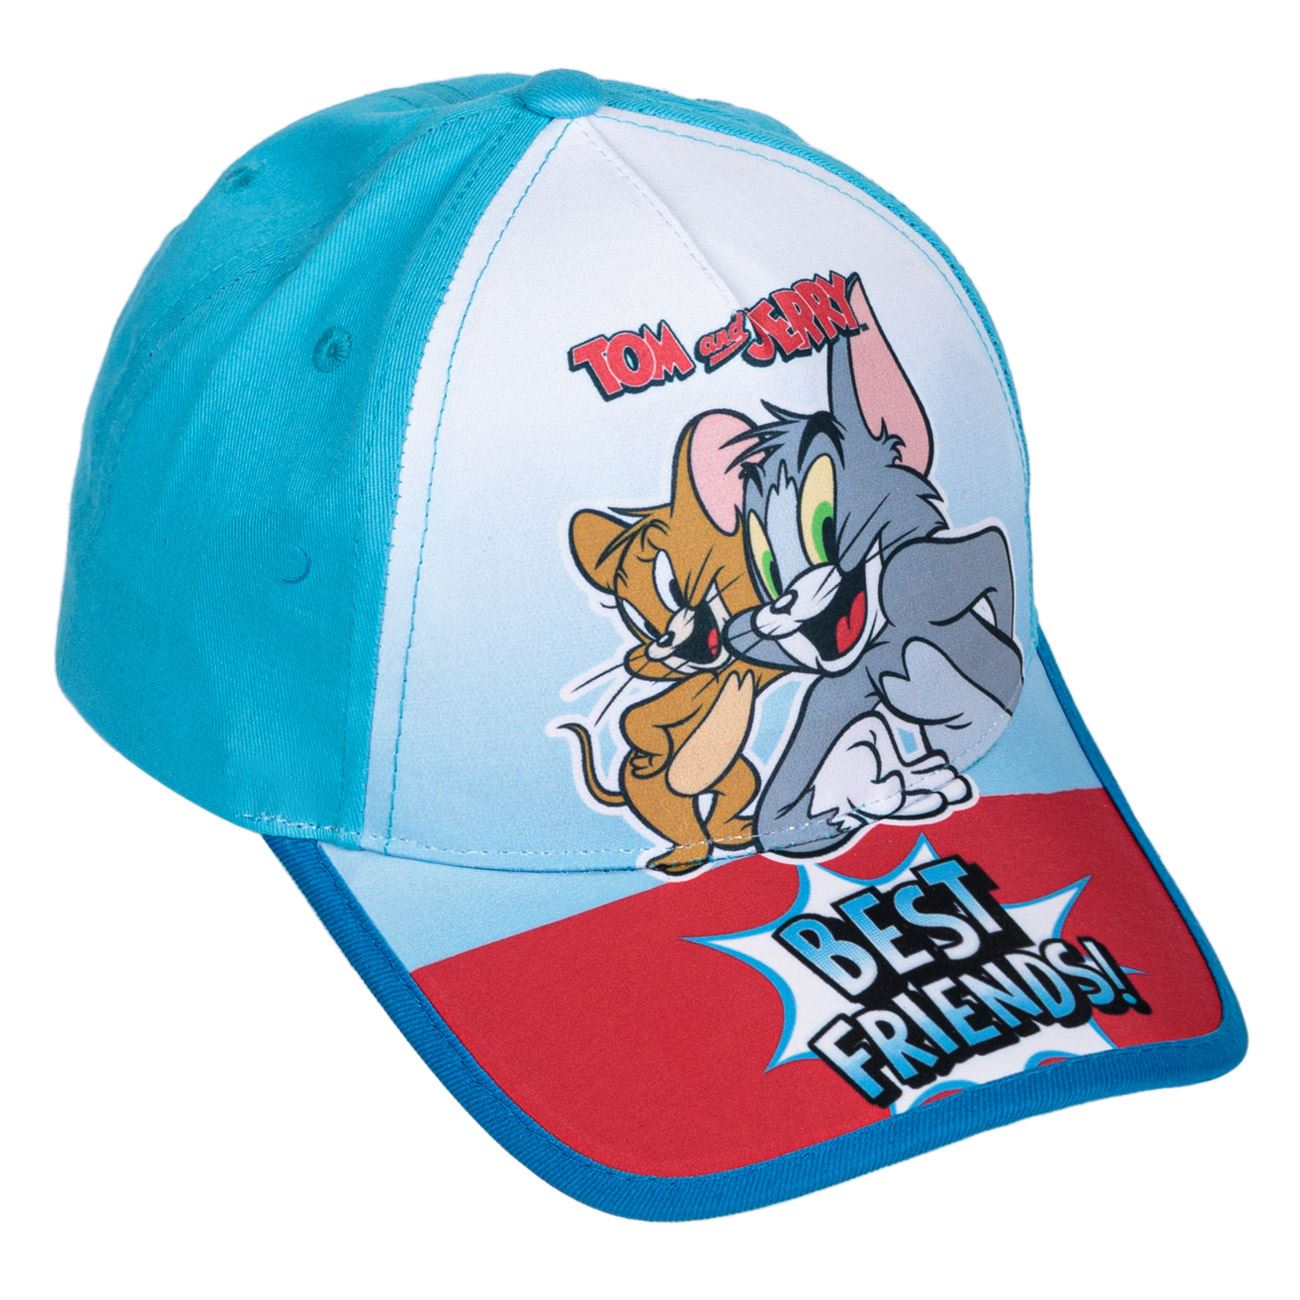 Tom & Jerry baseball sapka